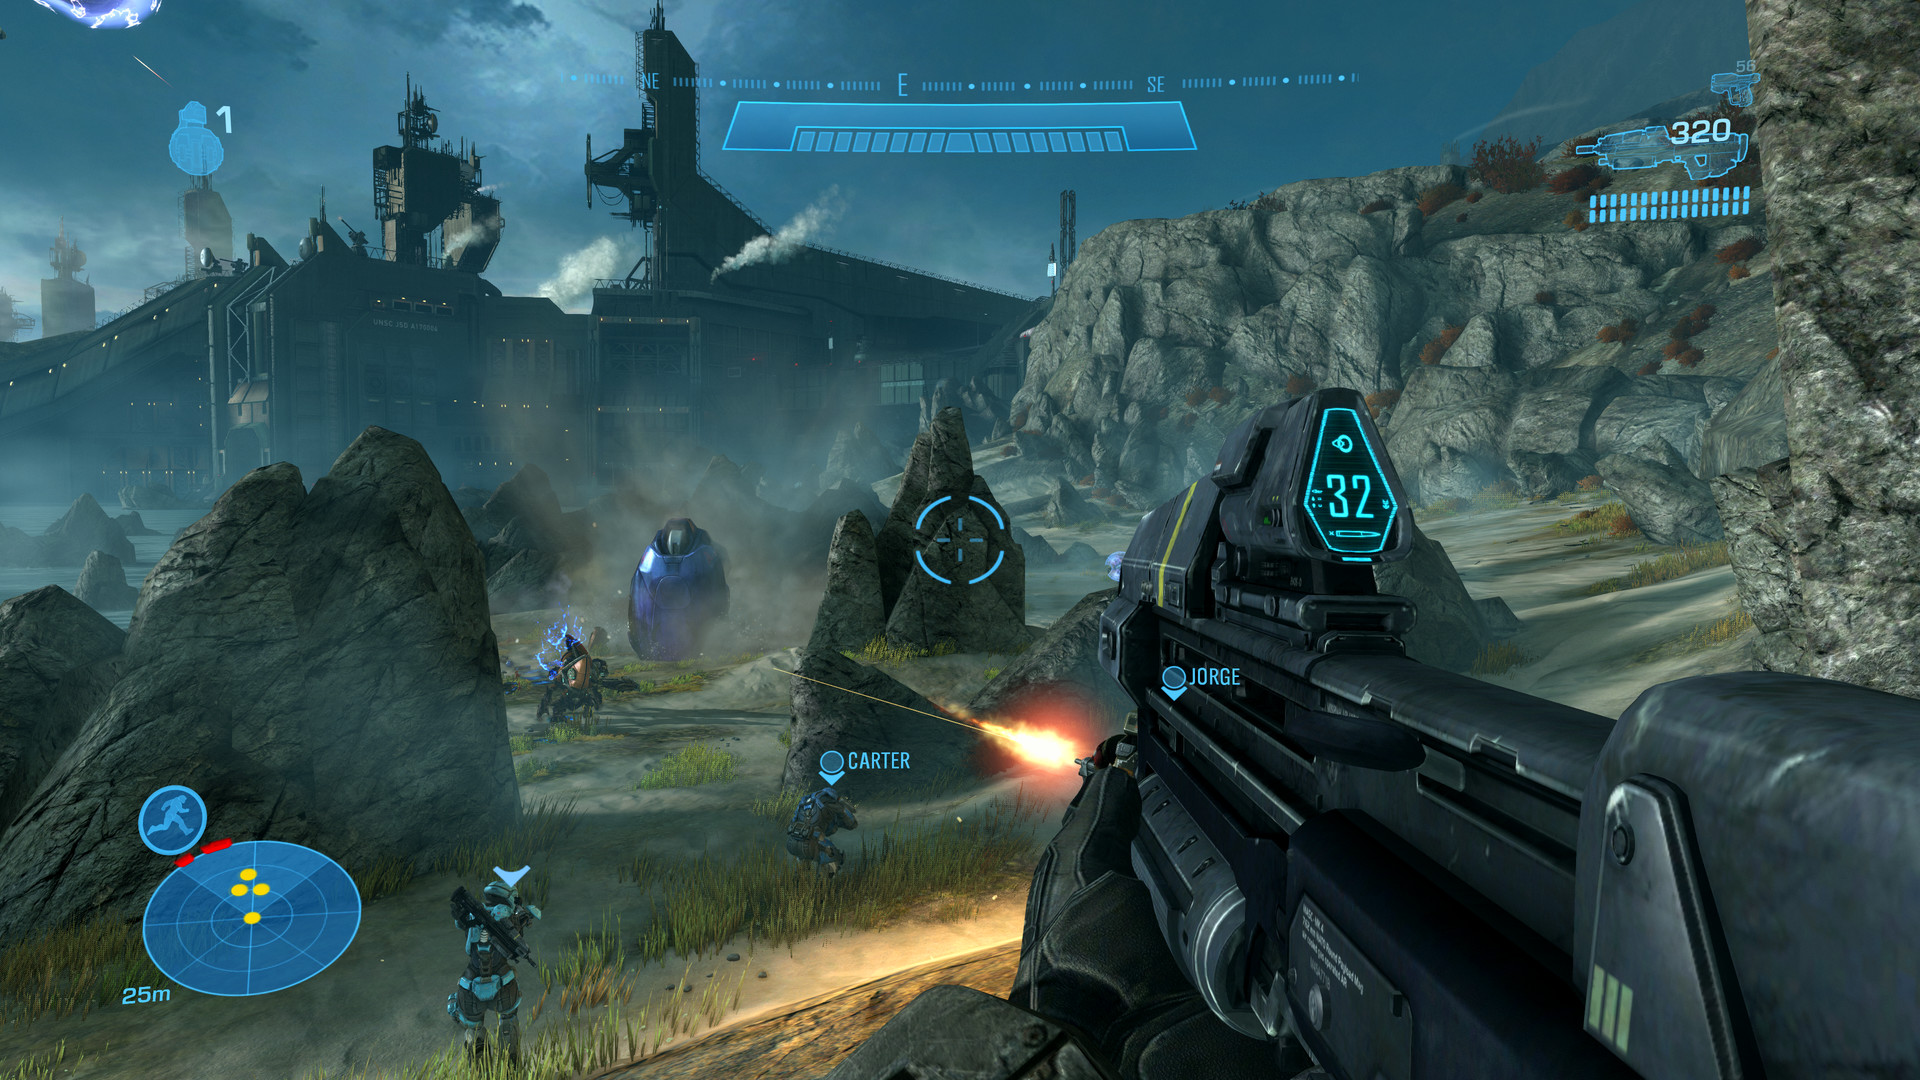 Save 75% on Halo: Reach on Steam